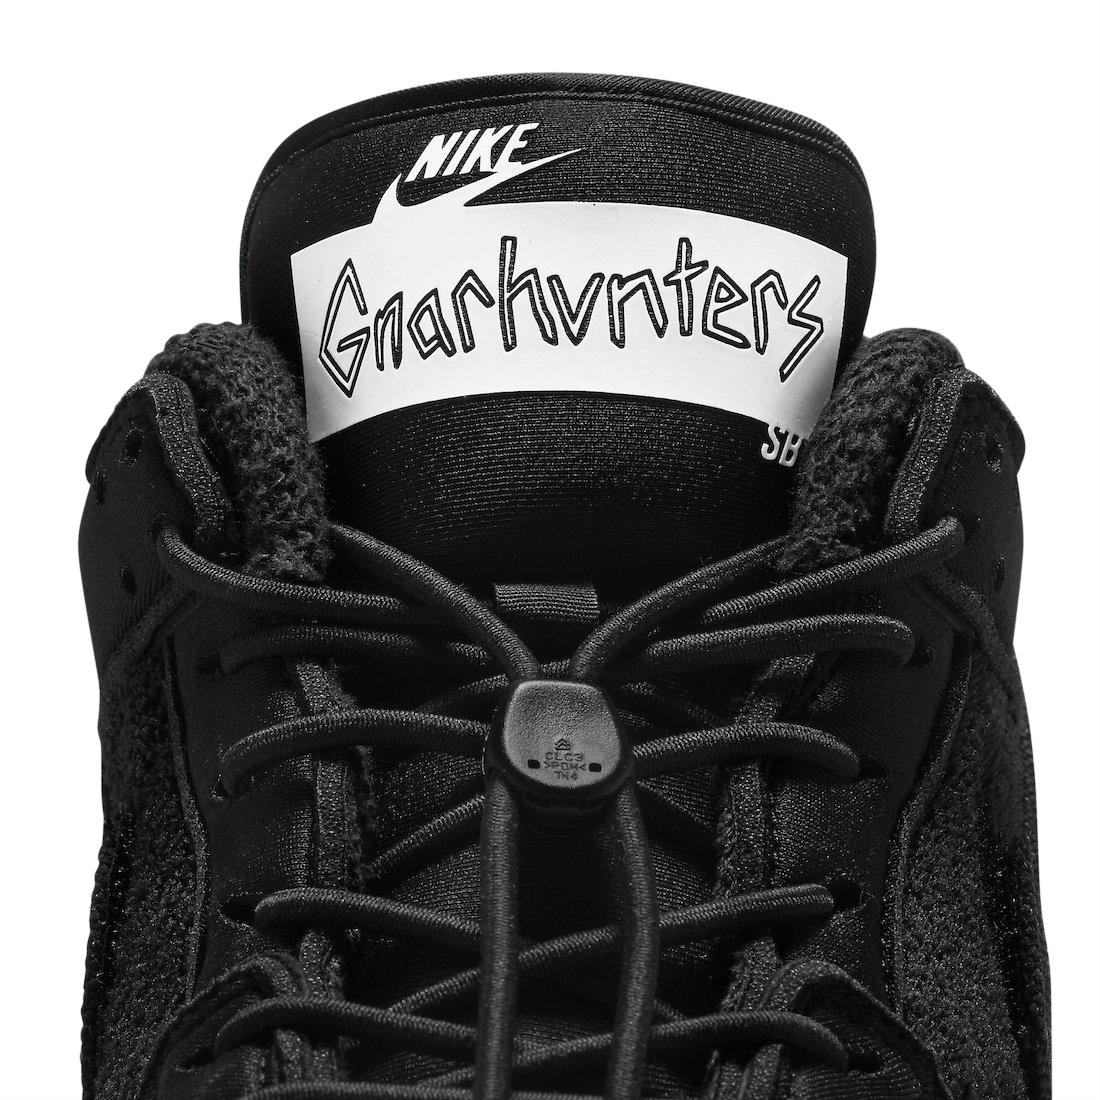 Gnarhunters x Nike SB Dunk Low DH7756-010